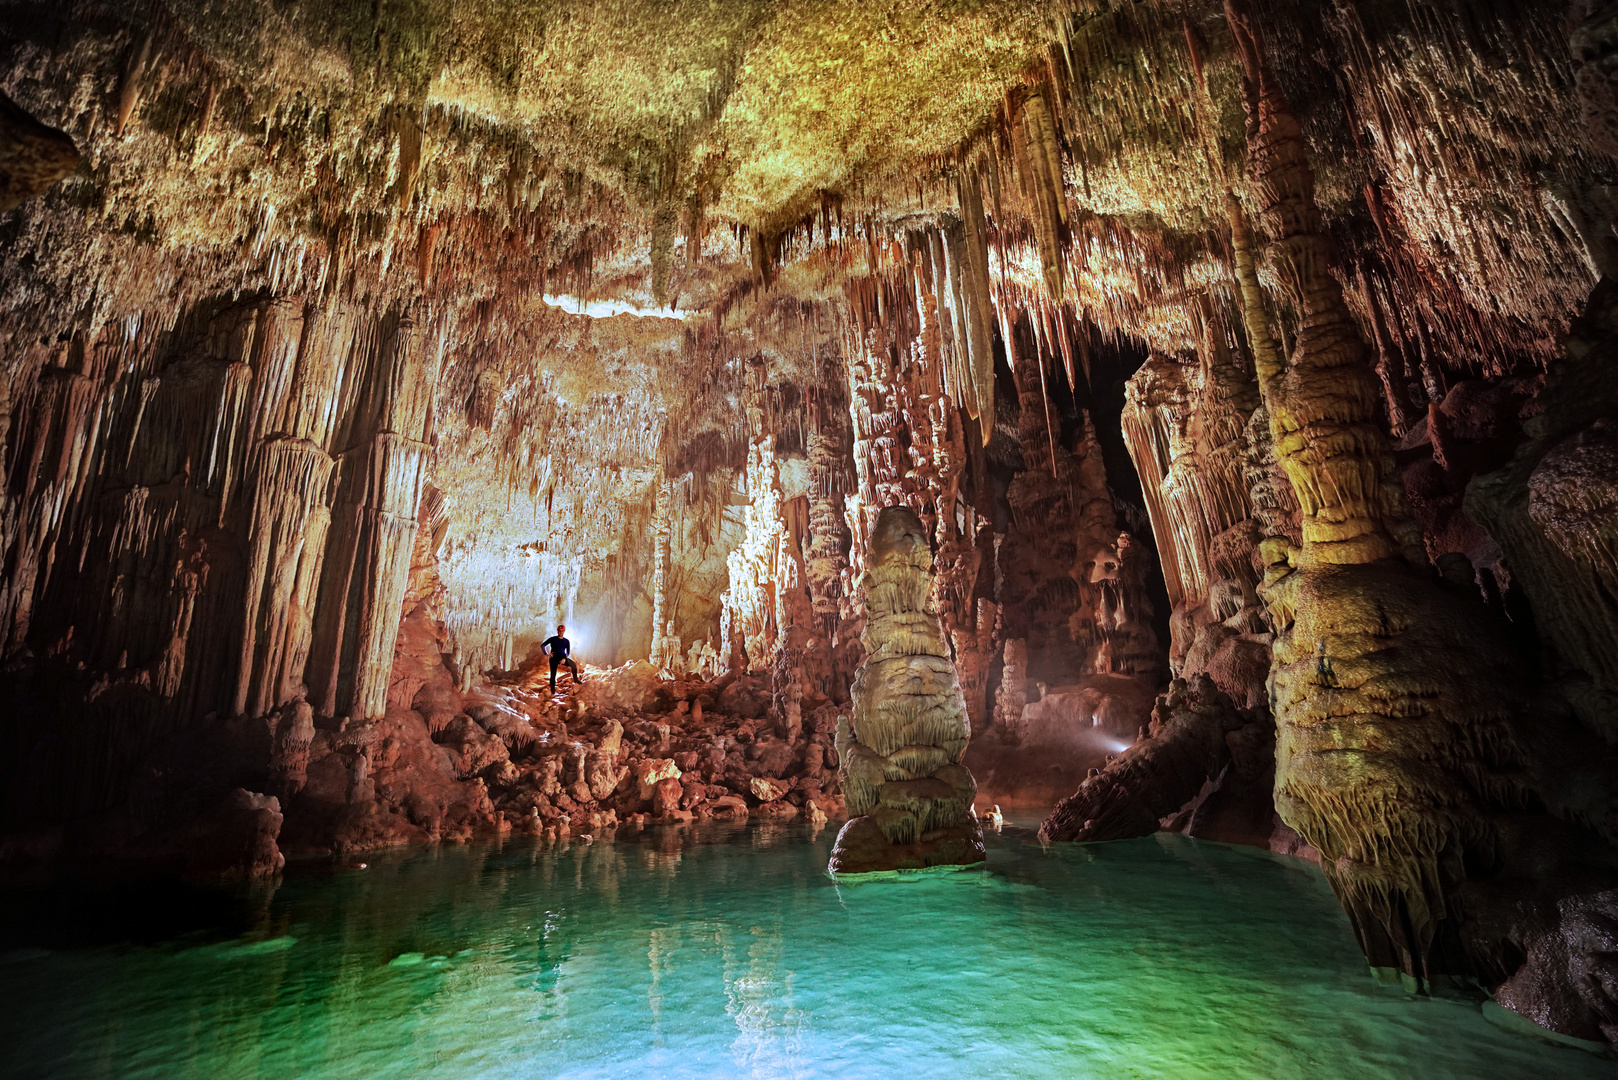 Höhle Mallorca Cova des Coloms de Cala Falco 